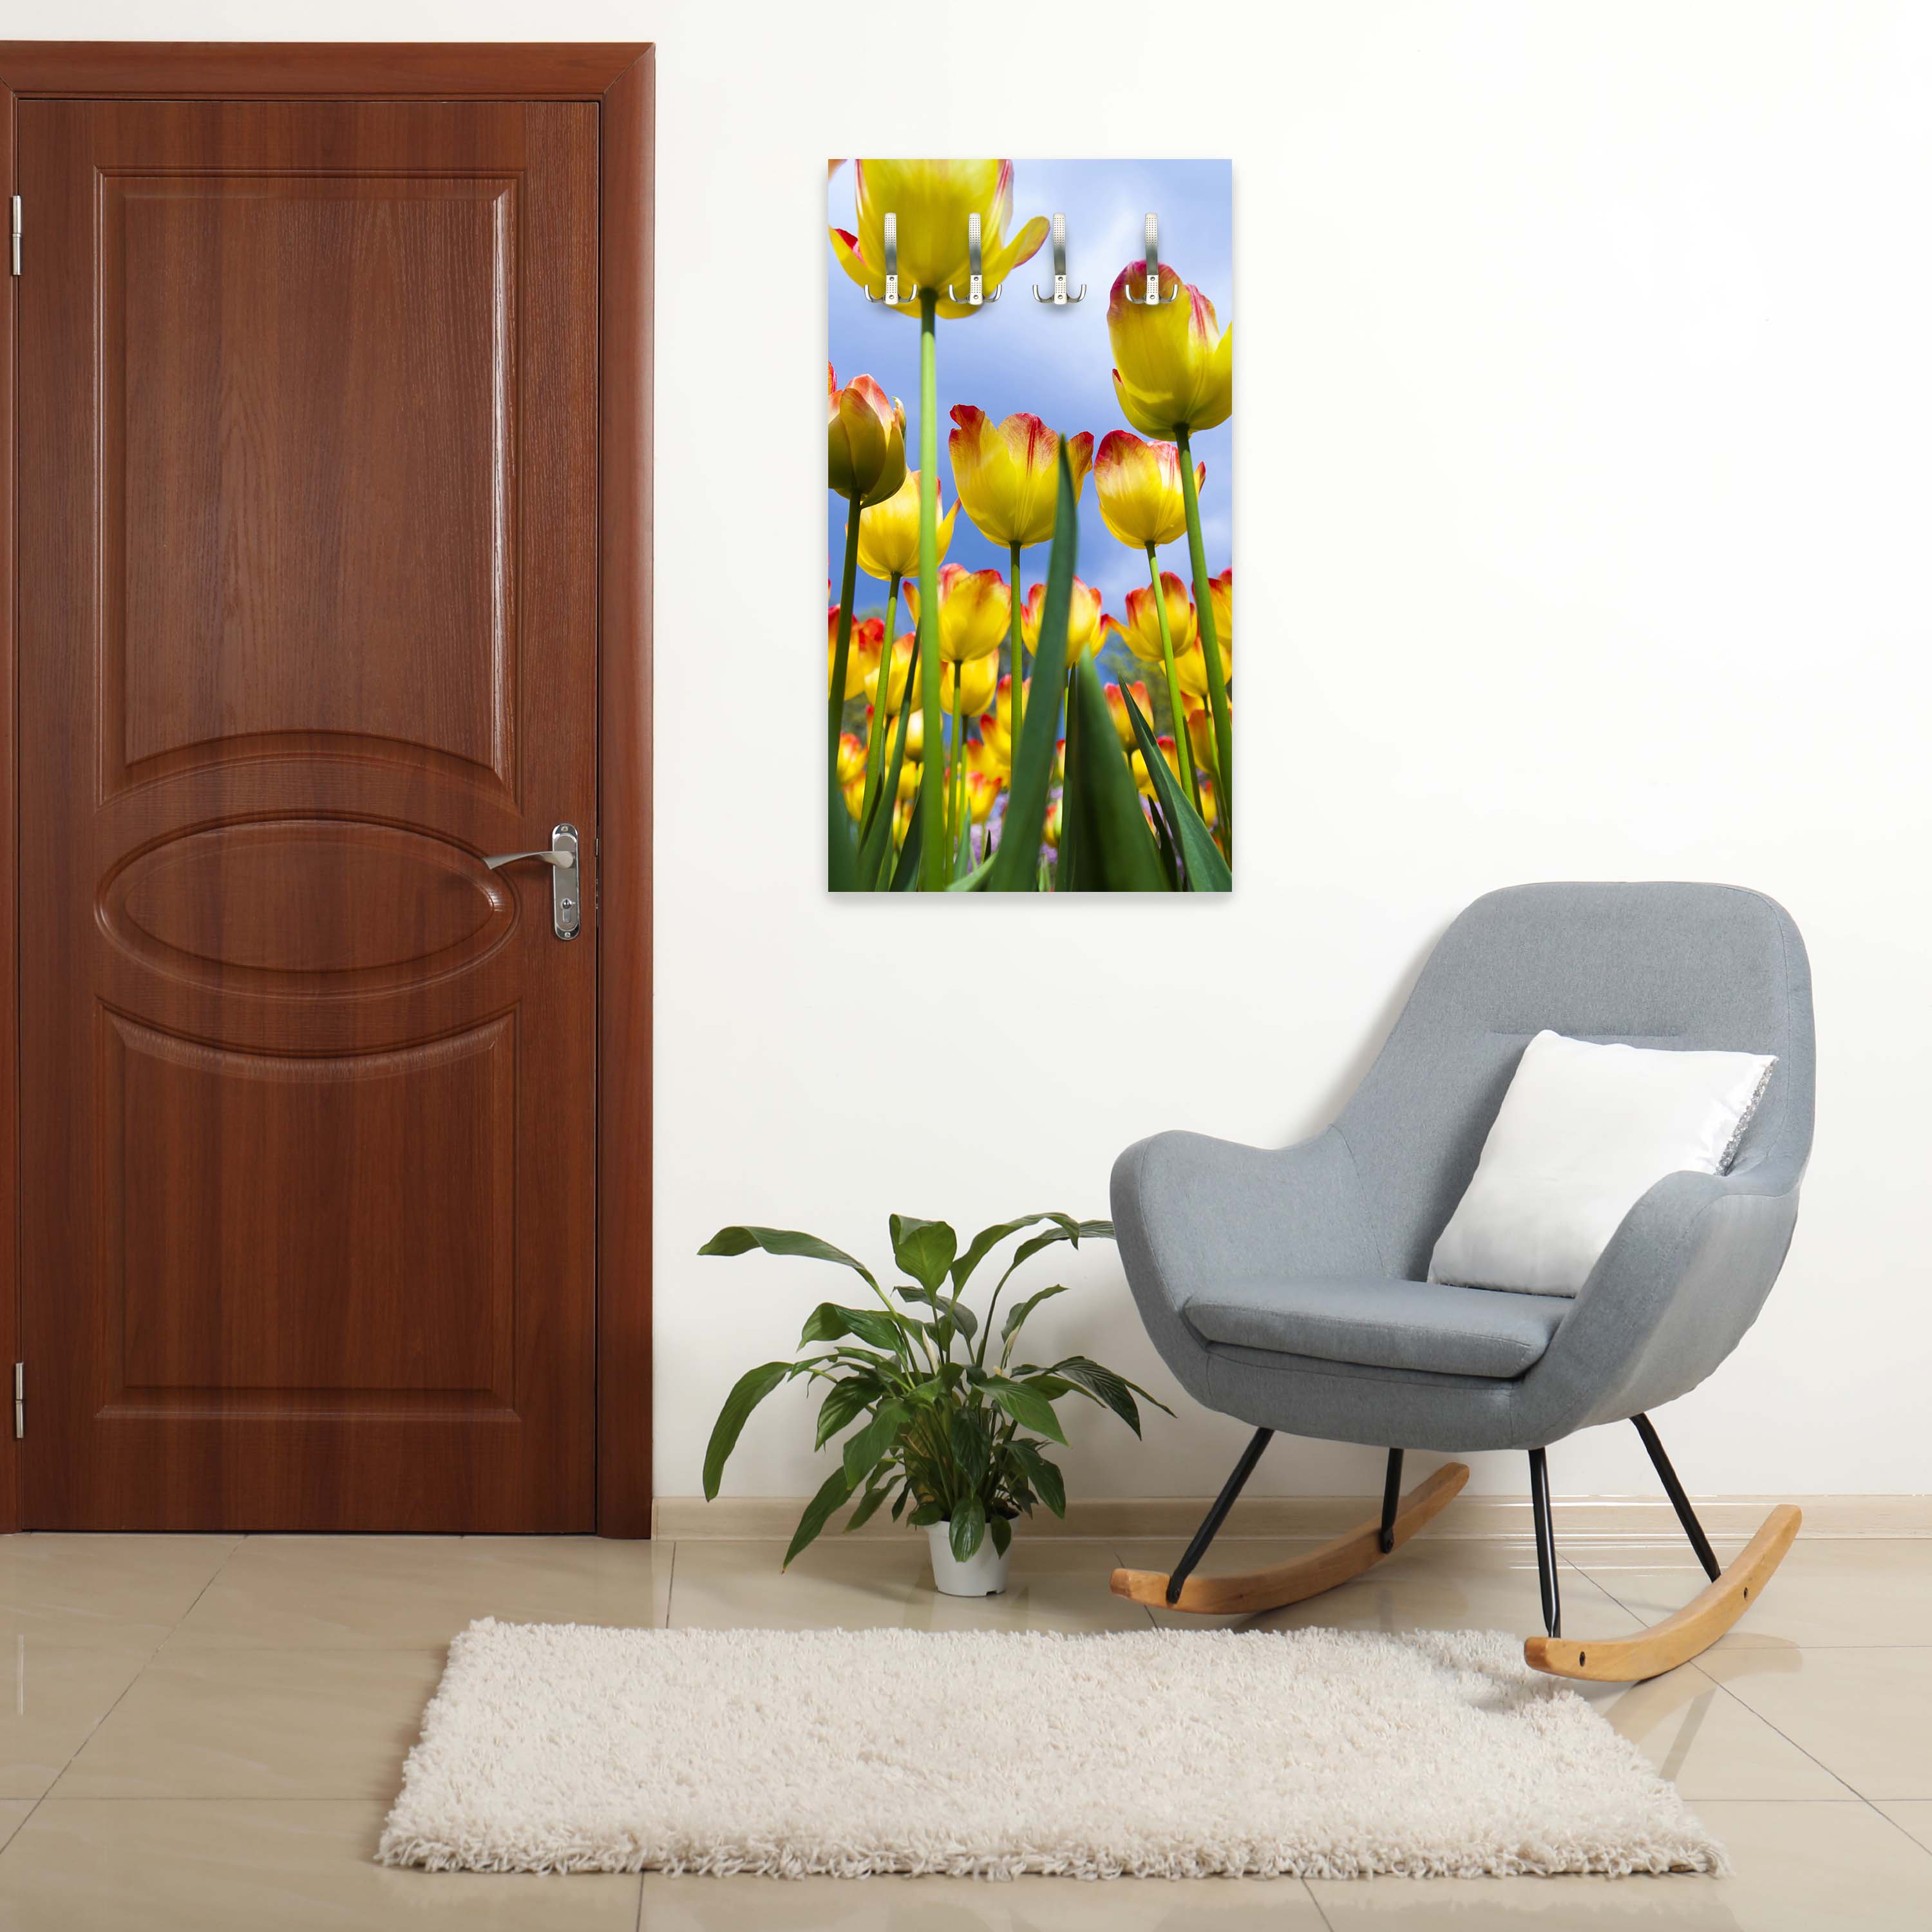 Garderobe Tulpen M1029 entdecken - Bild 3